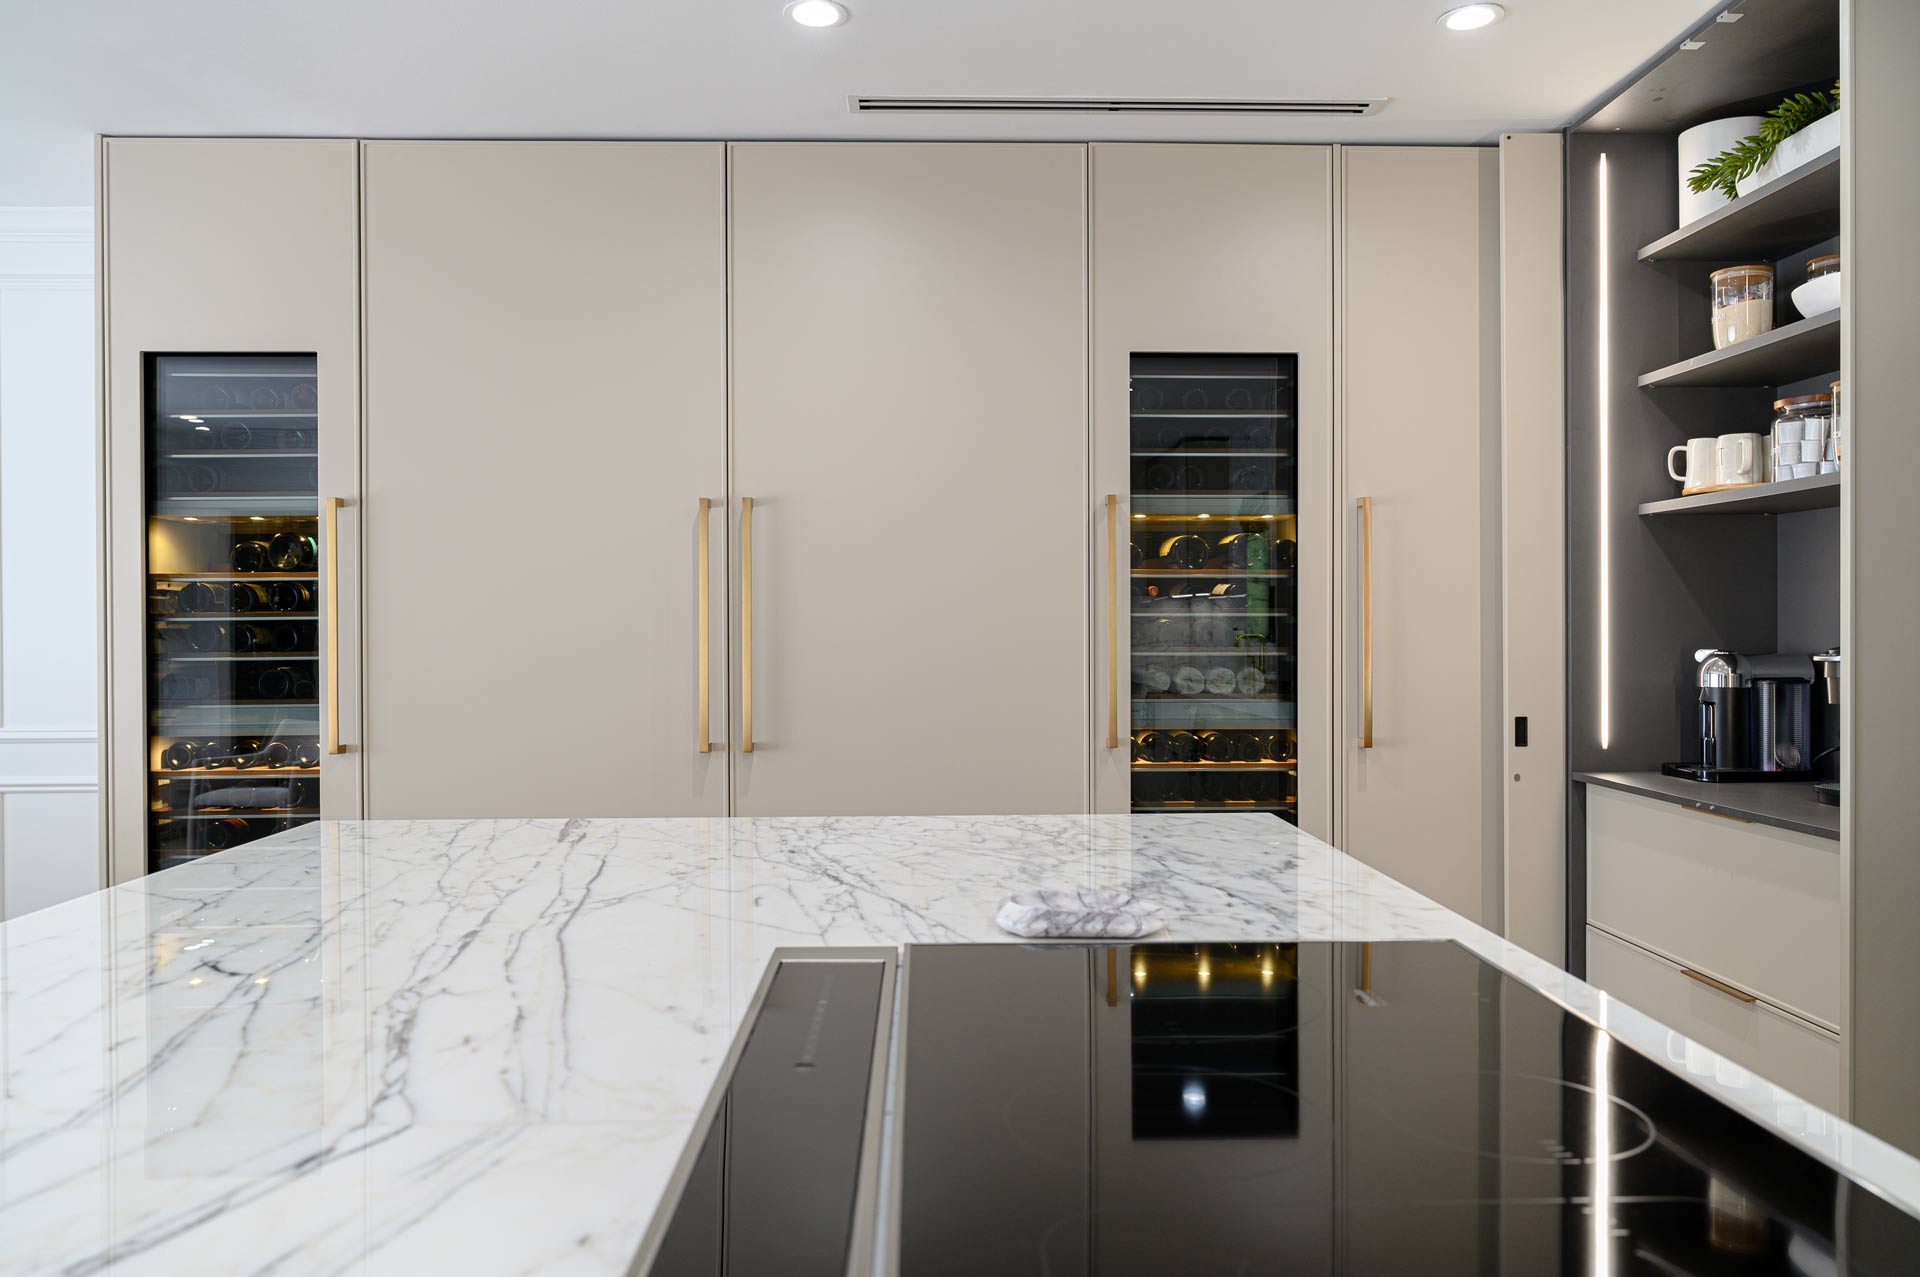 extravagant bespoke kitchen cabinets